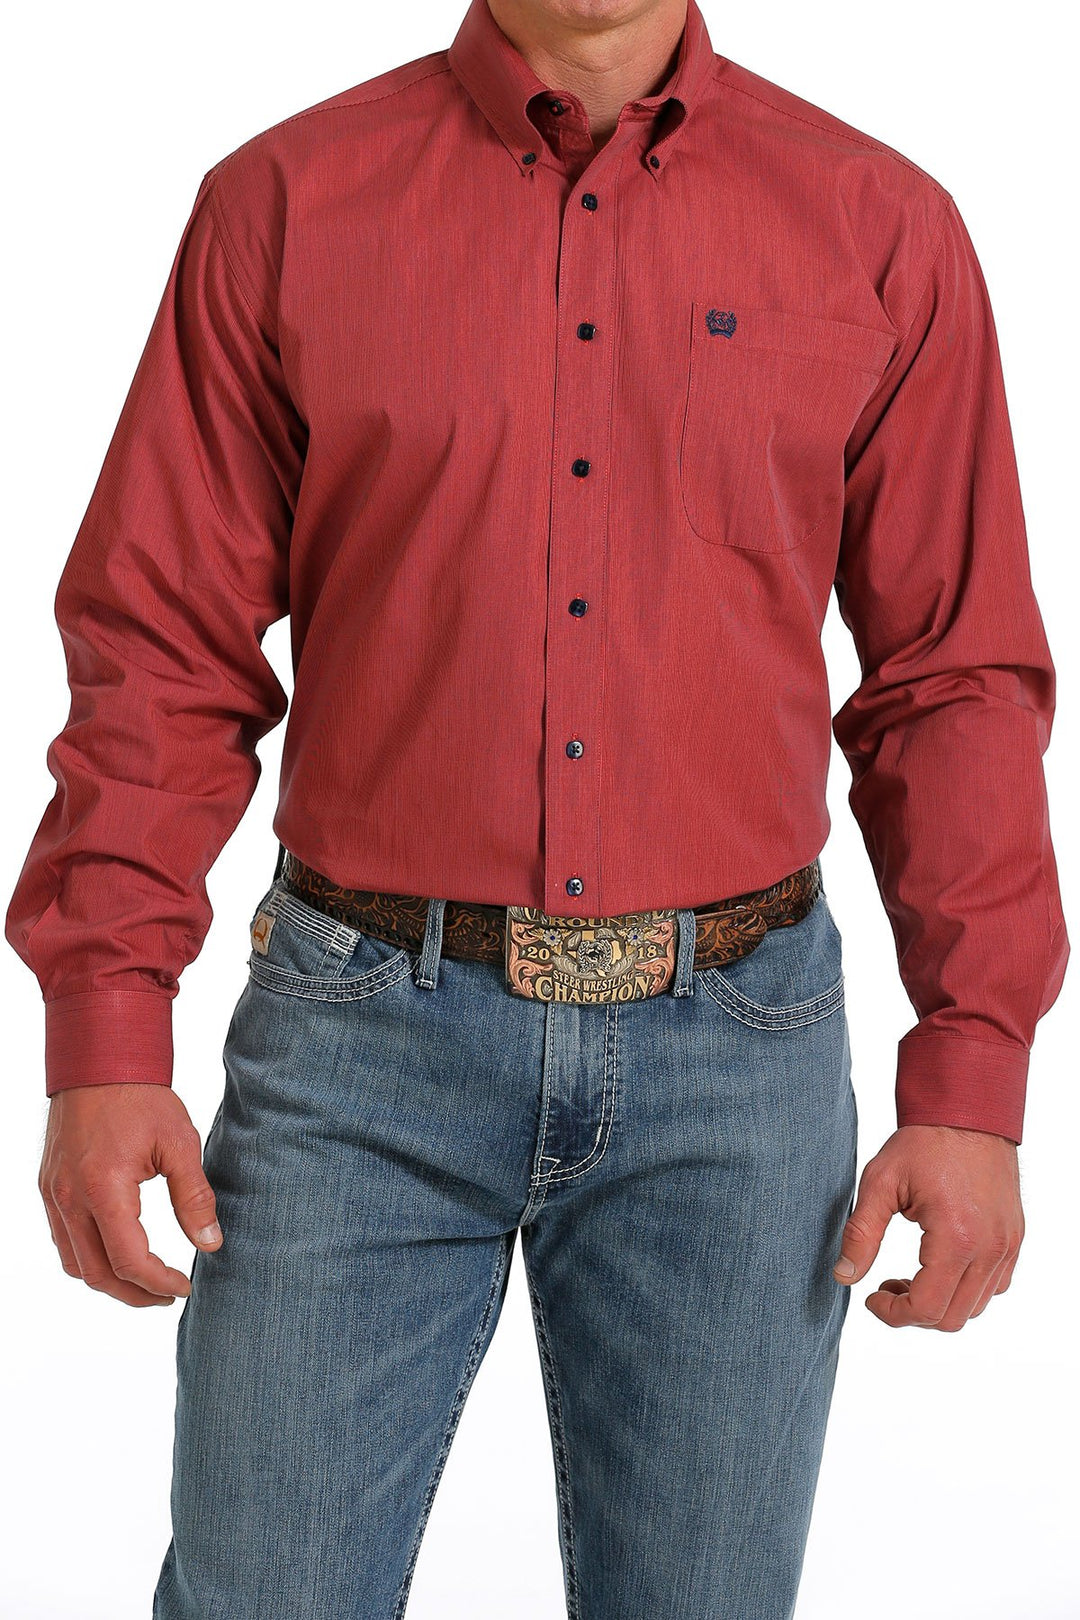 Cinch - Mens Red Micro Stripe Arena Shirt